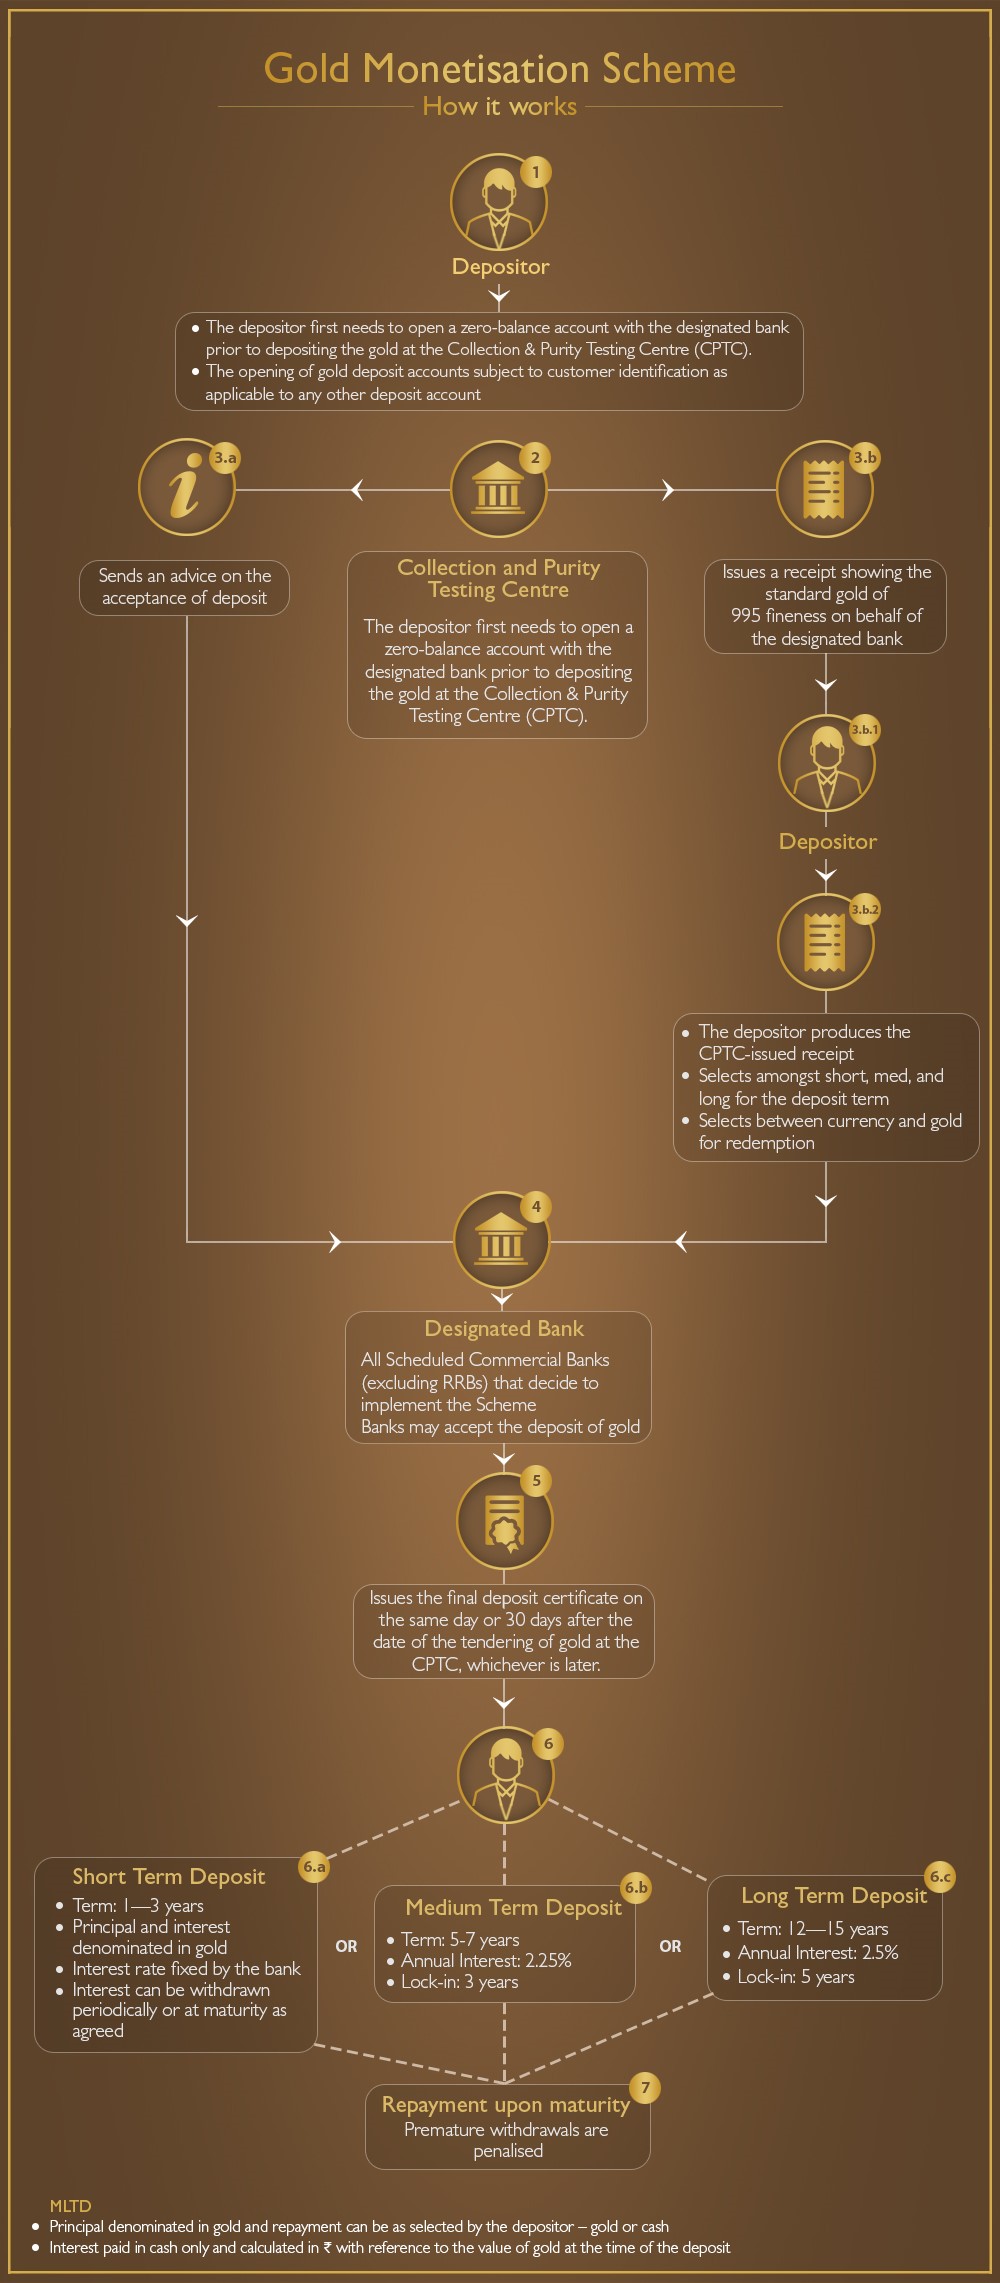 How does the Gold Monetization Scheme work?